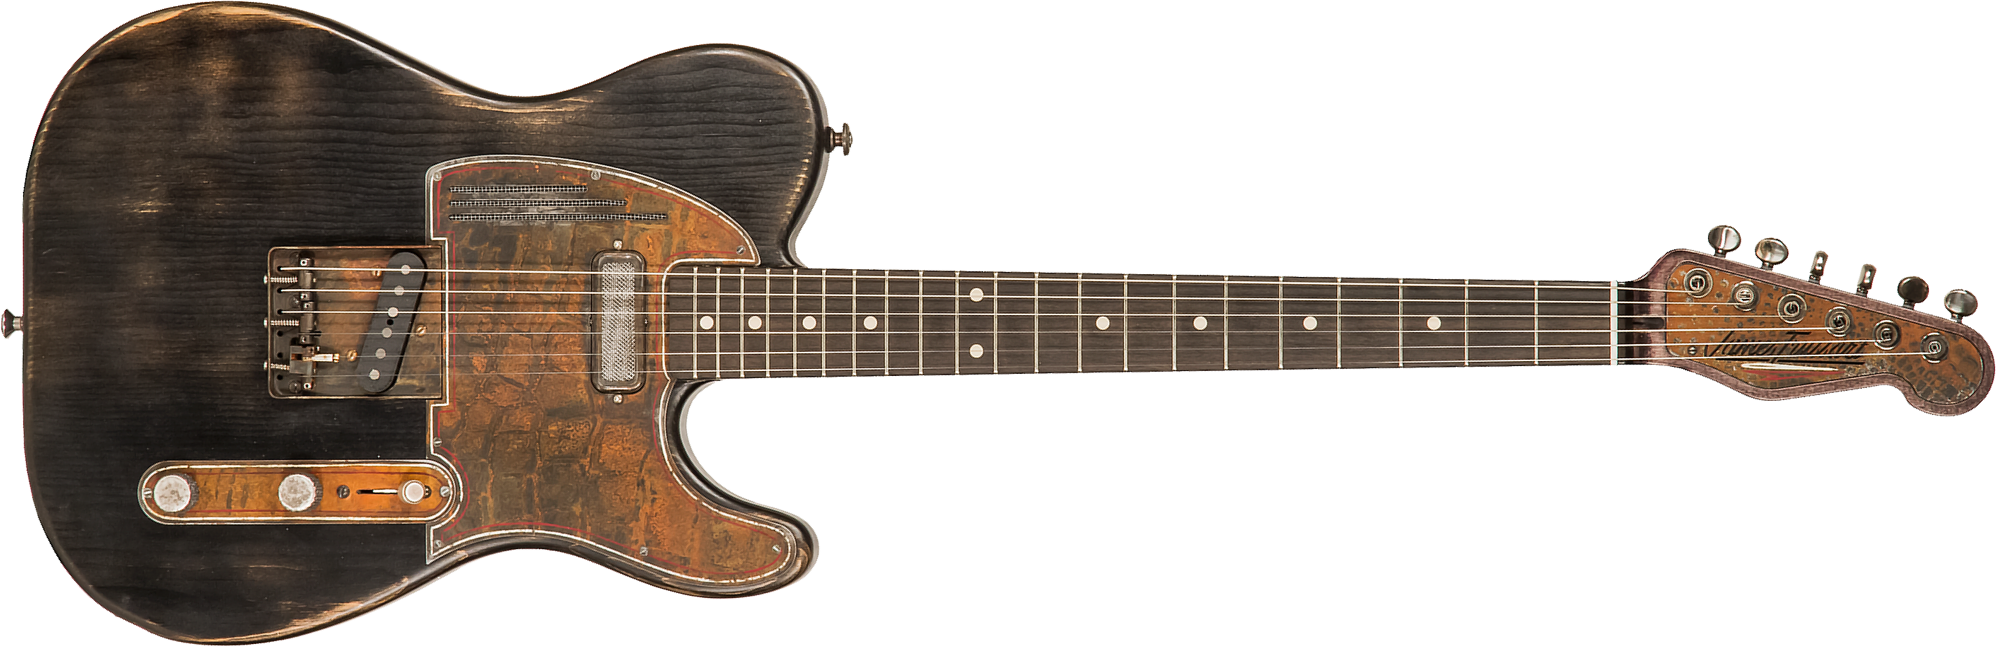 James Trussart Steelguardcaster Glaser B Bender Sh Ht Eb #21062 - Rust O Matic Pinstriped Black Nitro - E-Gitarre in Teleform - Main picture